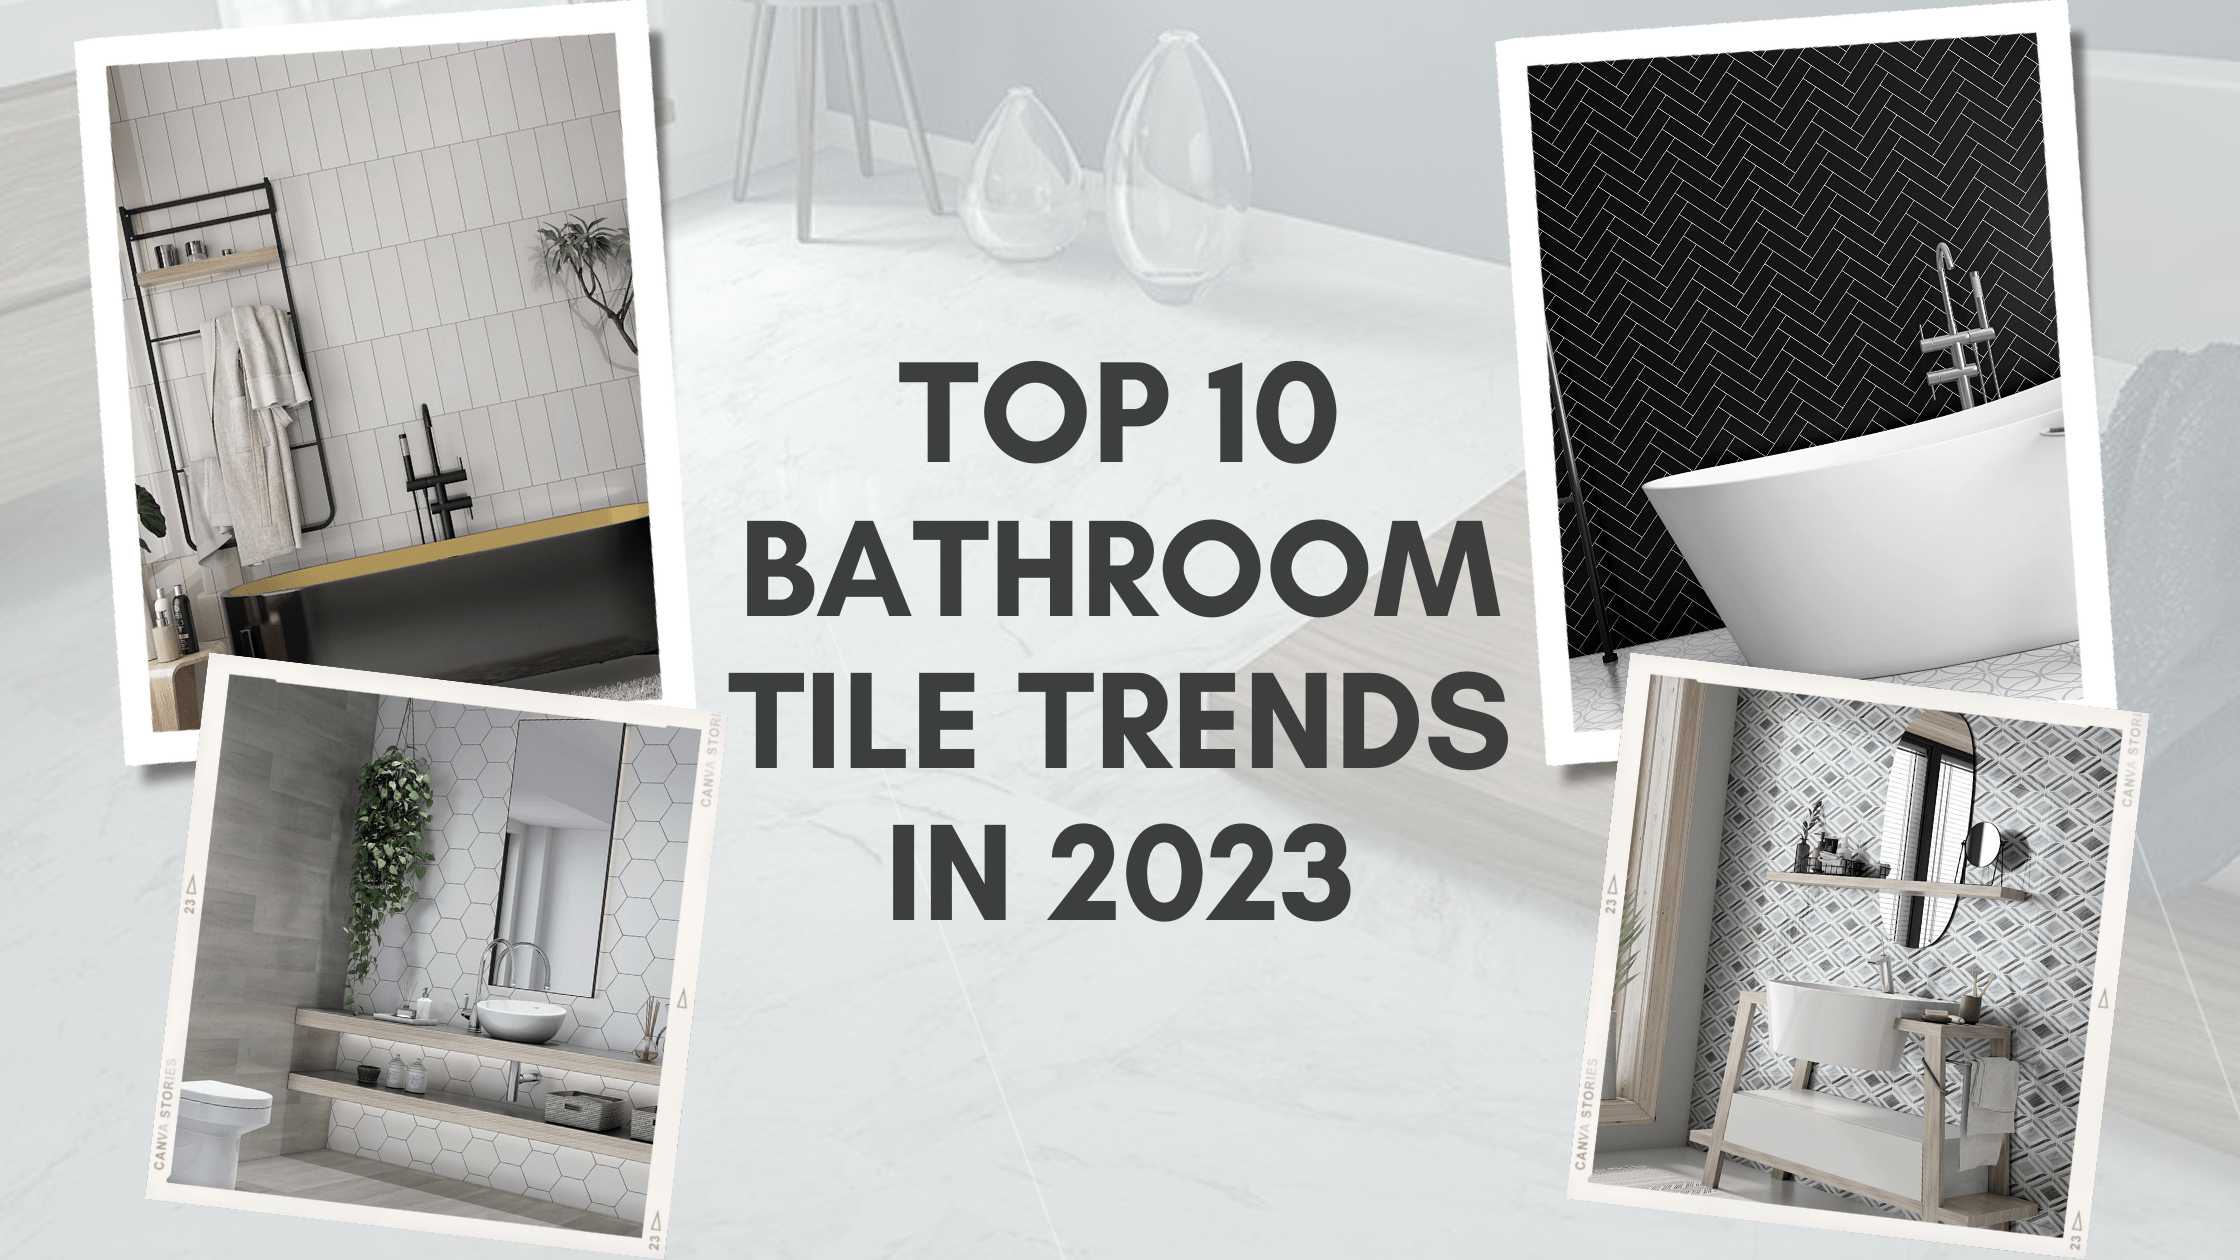 55 Small Bathroom Design Ideas, Top 10 Design Trends 2023 for Small Spaces